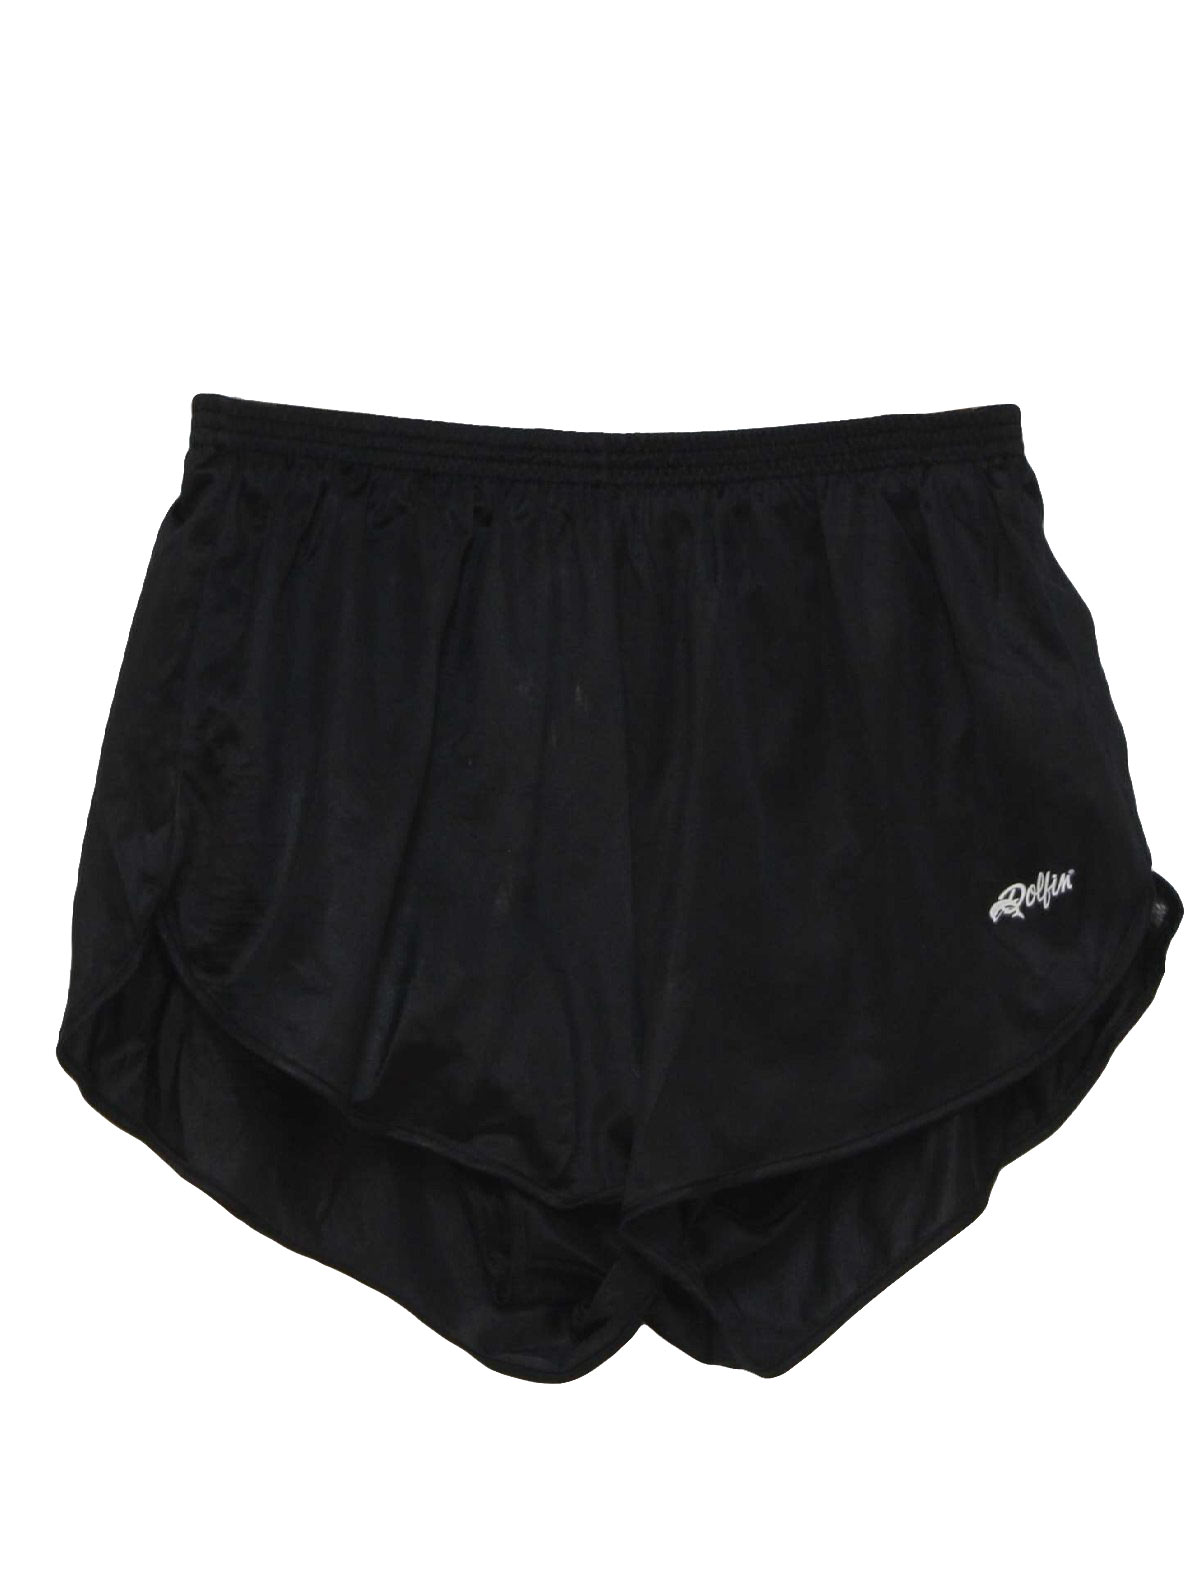 Vintage 1980's Shorts: 80s -Dolfin- Mens black nylon brief lined ...